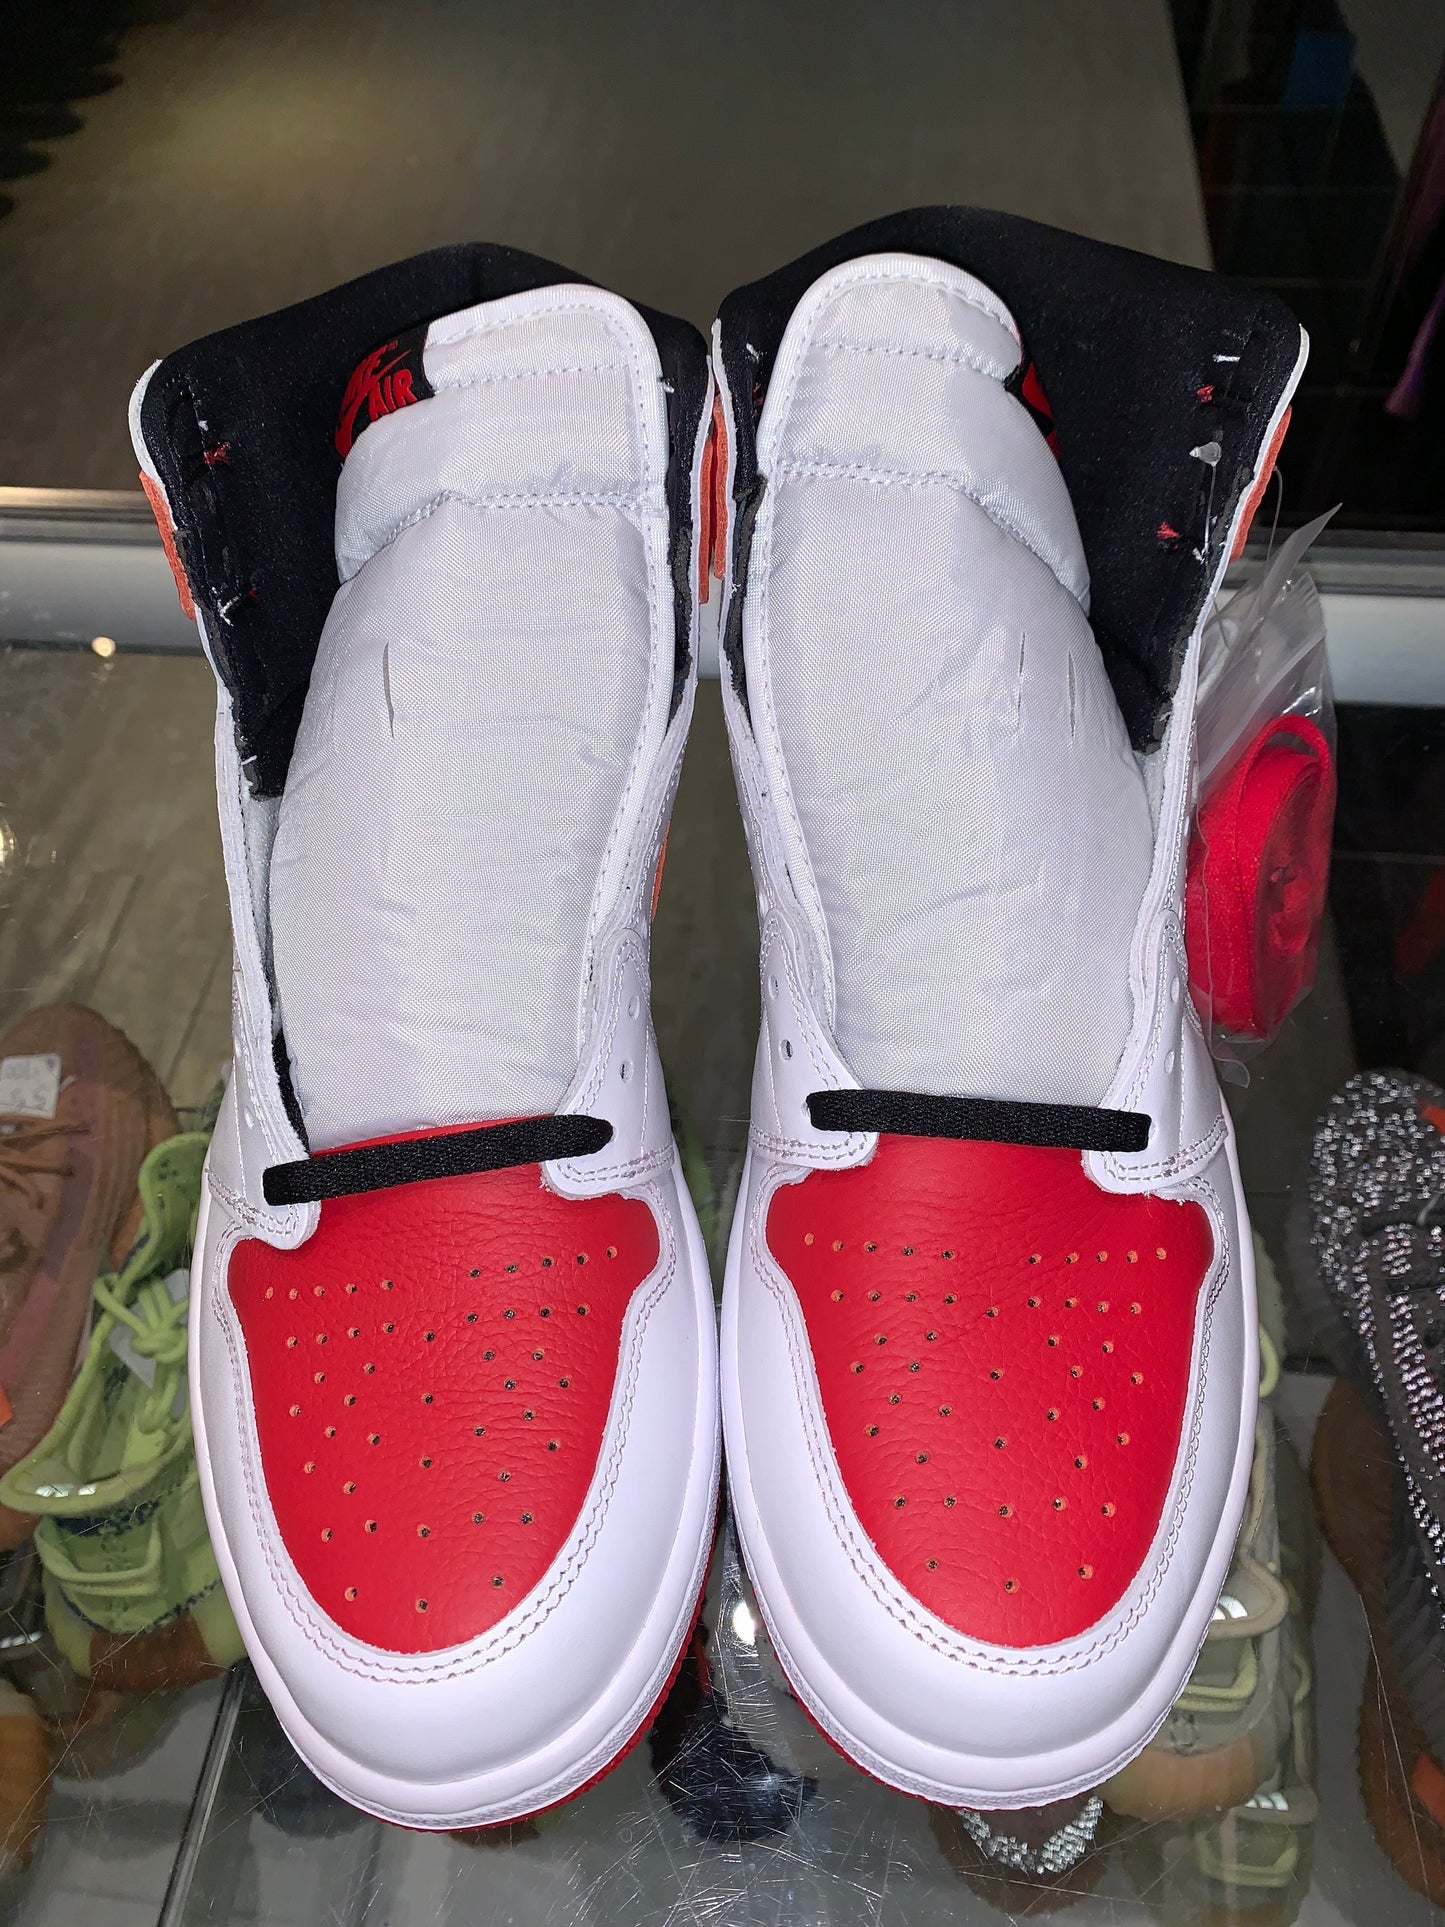 Size 10.5 Air Jordan 1 “Heritage” Brand New (Mall)